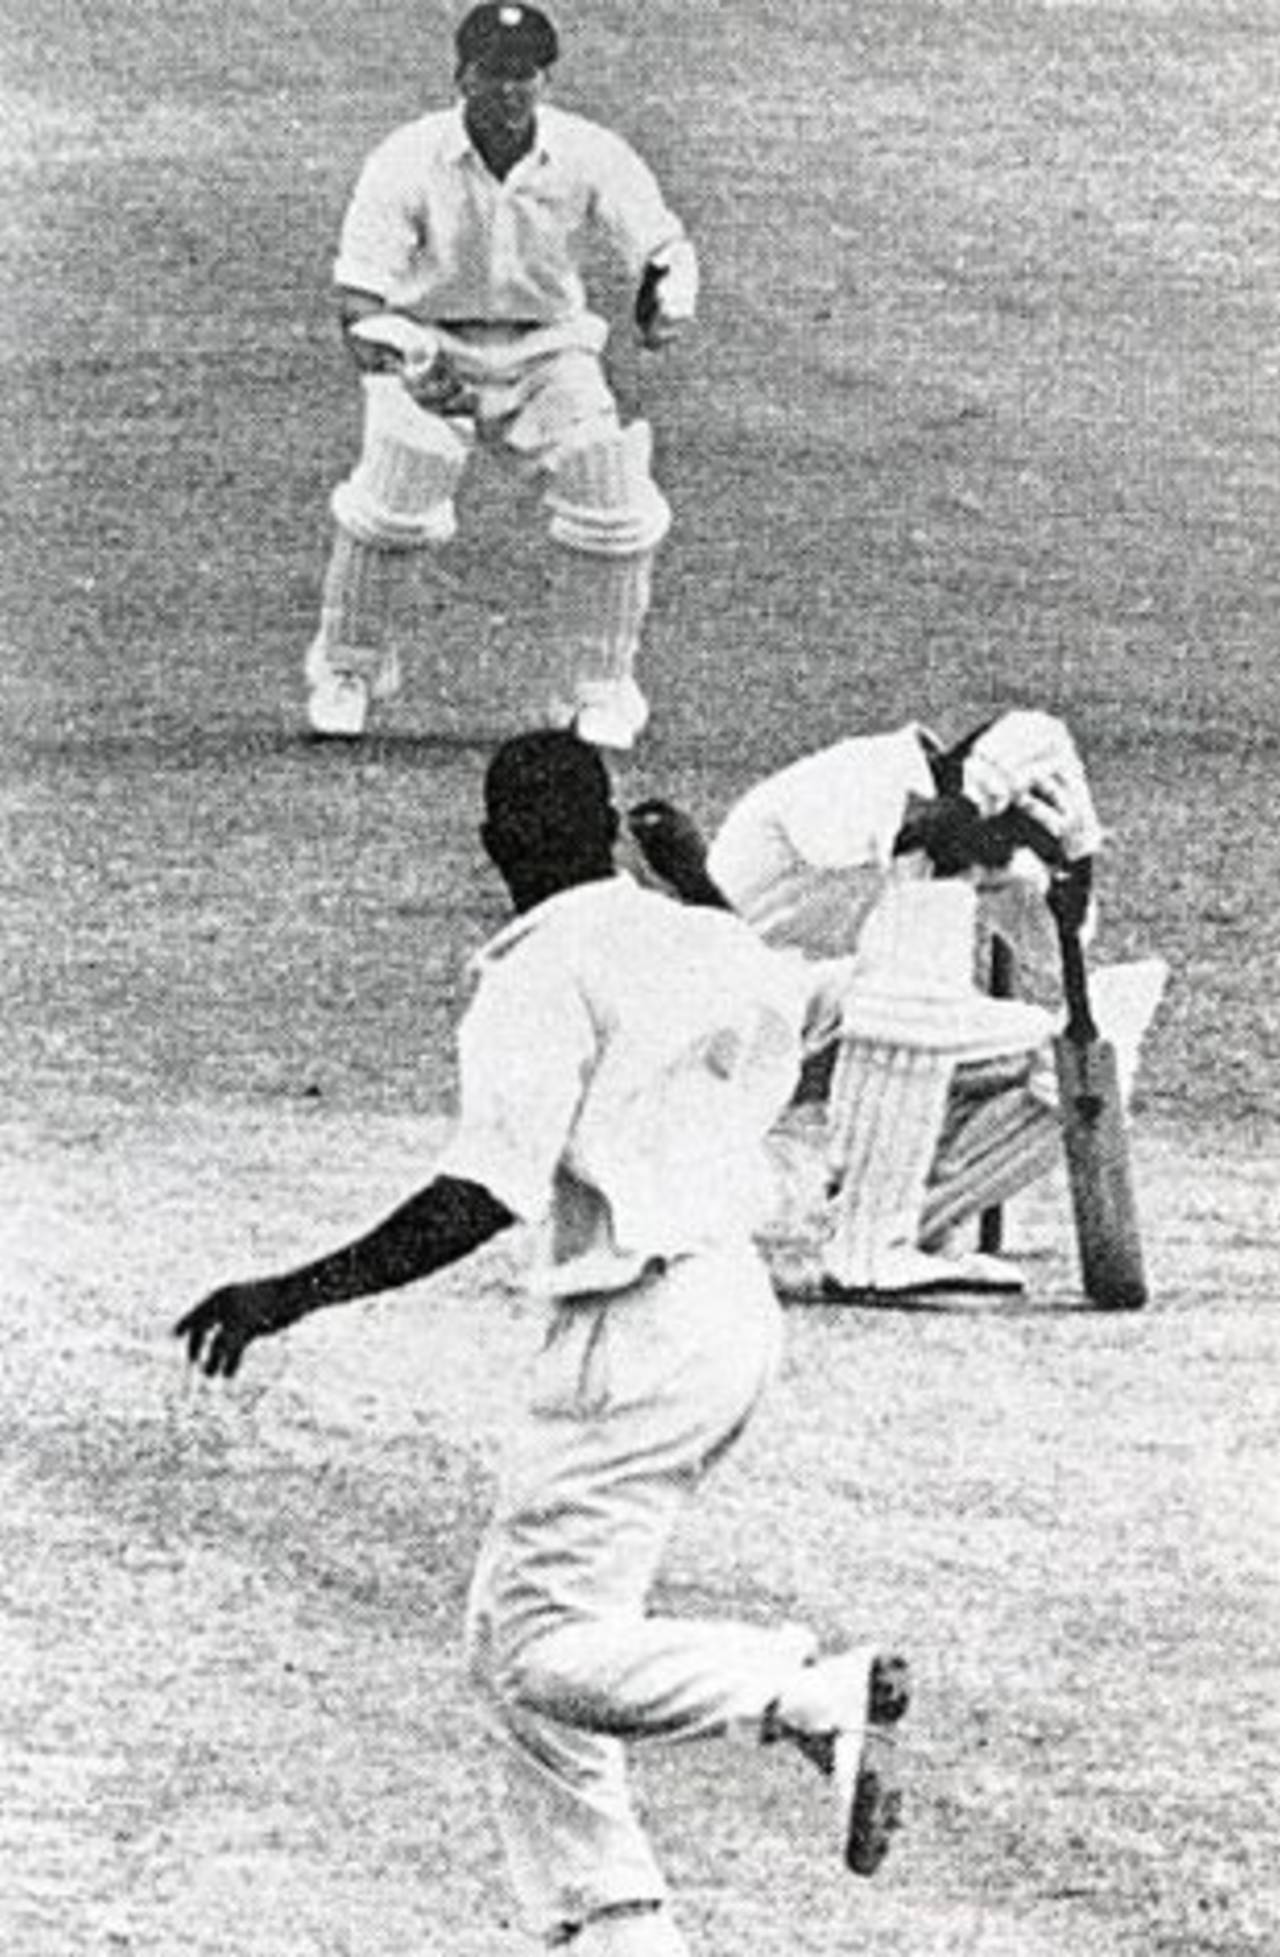 Nari Contractor clutches his head after being struck&nbsp;&nbsp;&bull;&nbsp;&nbsp;The Cricketer International